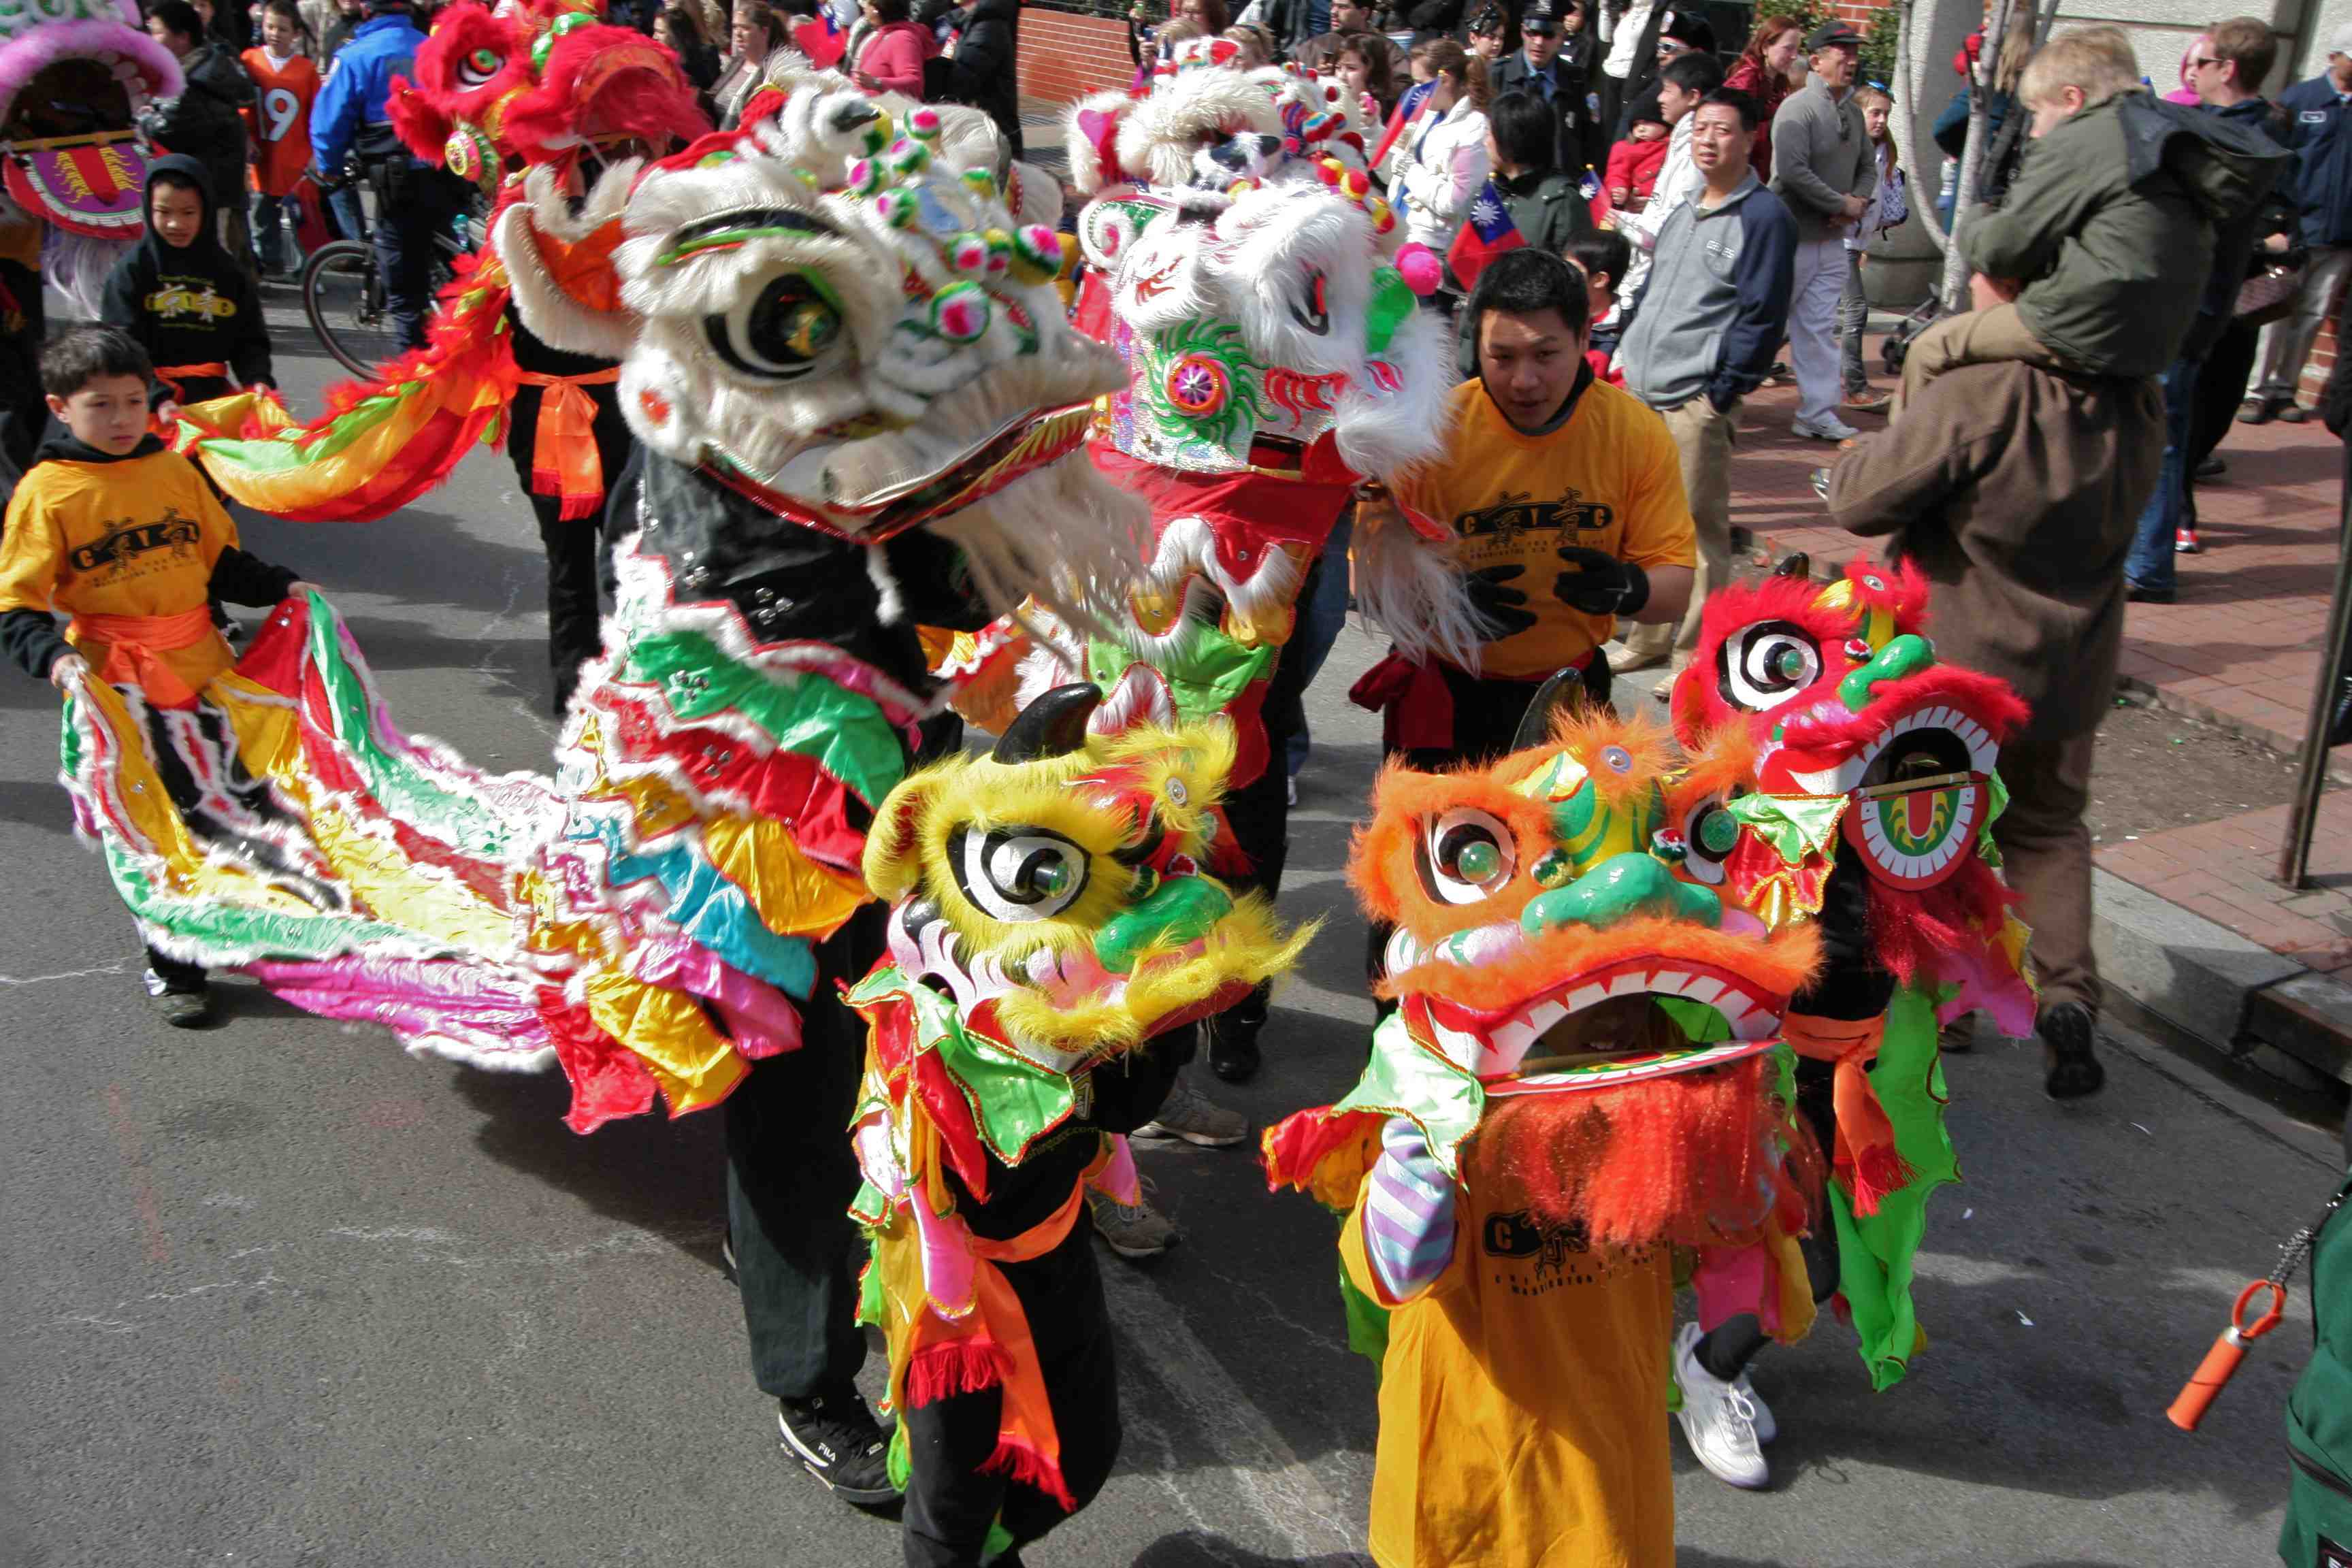 2019 DC Chinese New Year Parade in Chinatown, Washington DC3456 x 2304